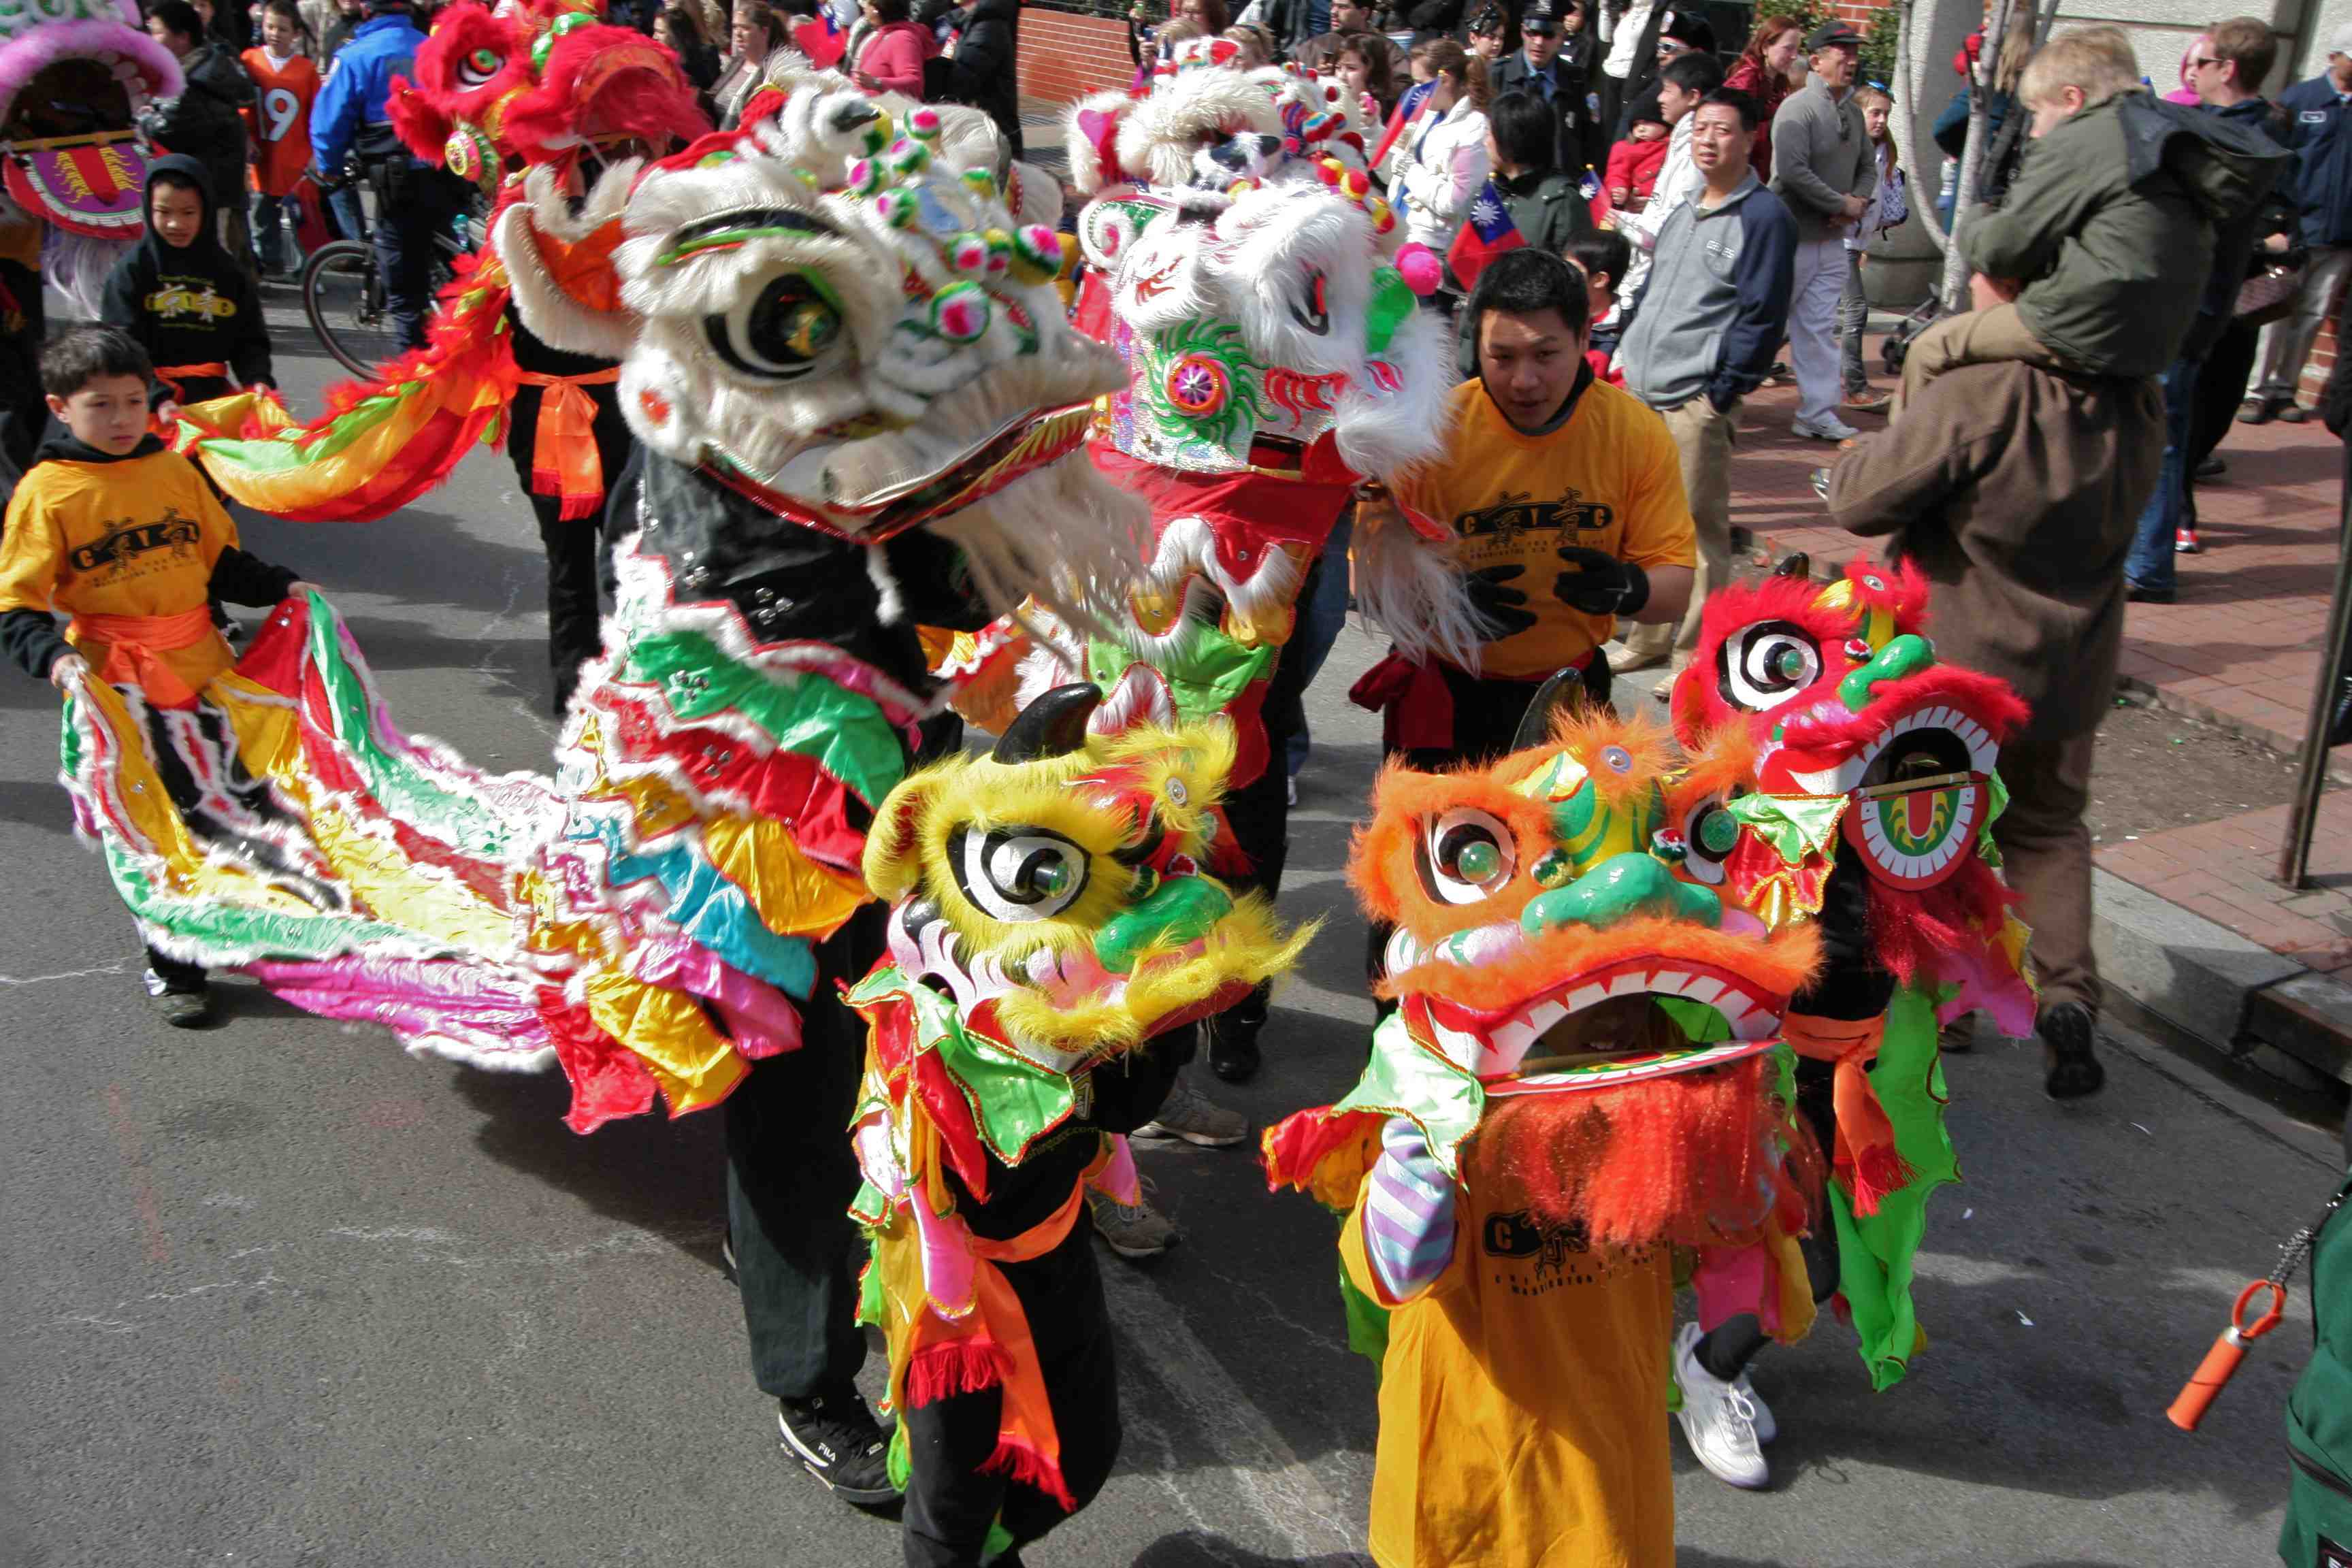 2019 DC Chinese New Year Parade in Chinatown, Washington DC3456 x 2304